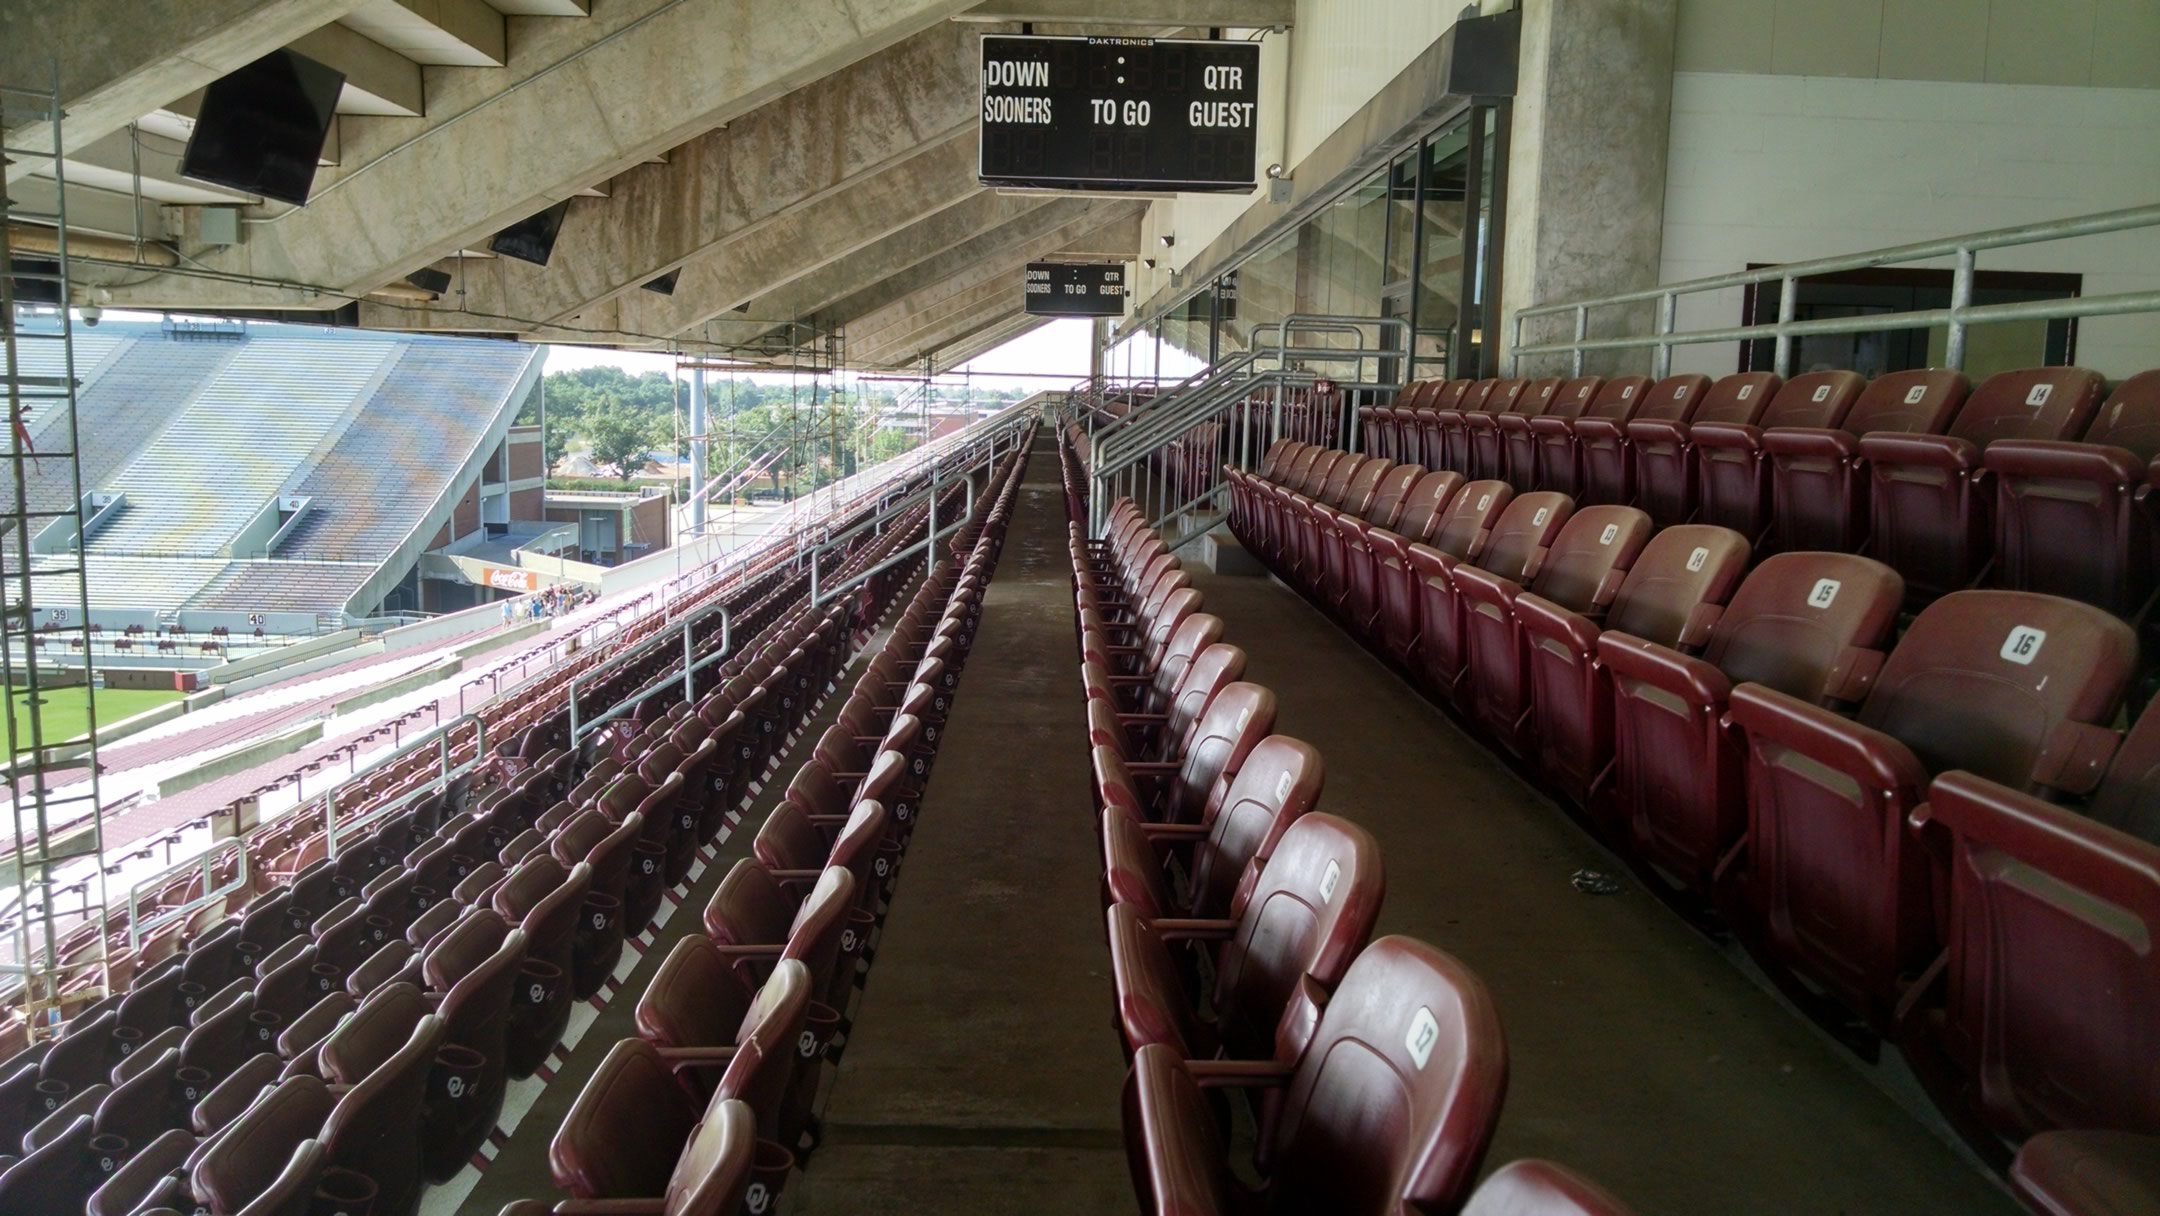 Owen Stadium Seating Chart